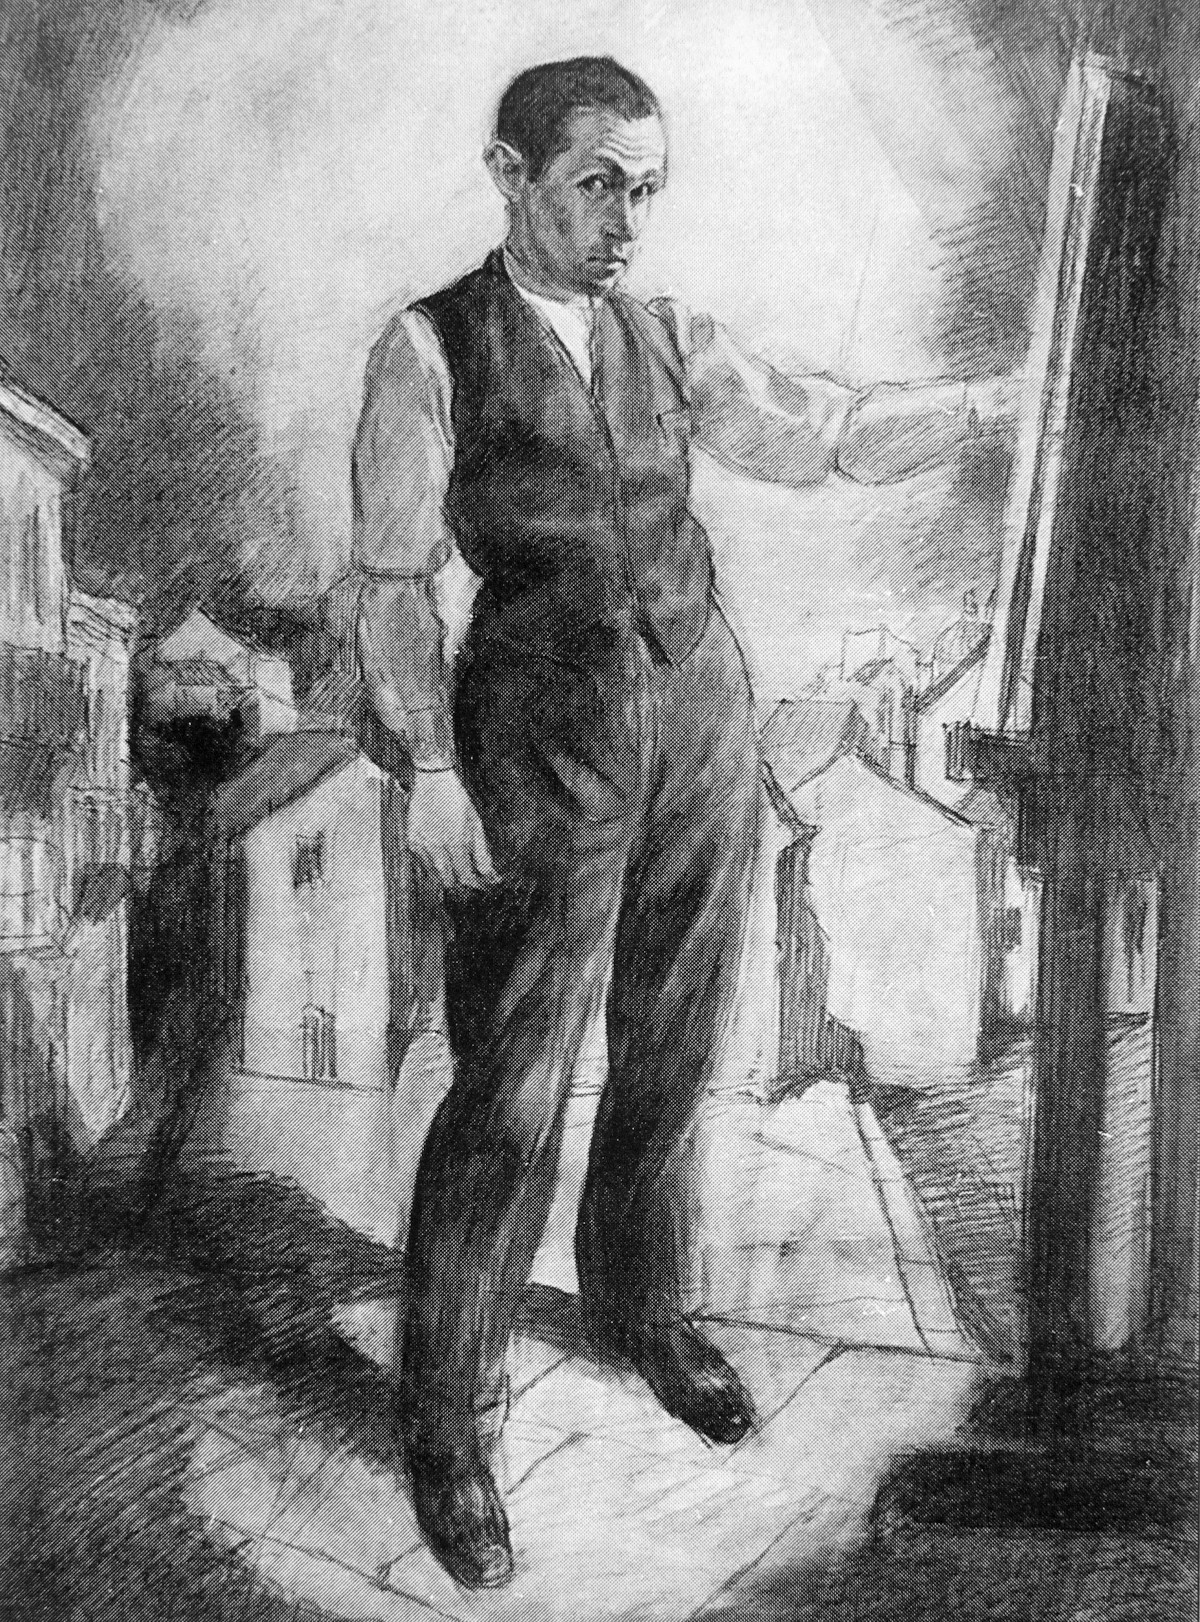 Bruno Schulz, "Autoportret ze sztalugami na tle miasteczka", ok. 1925 r. Fot. Forum/rep.Piotr Mecik